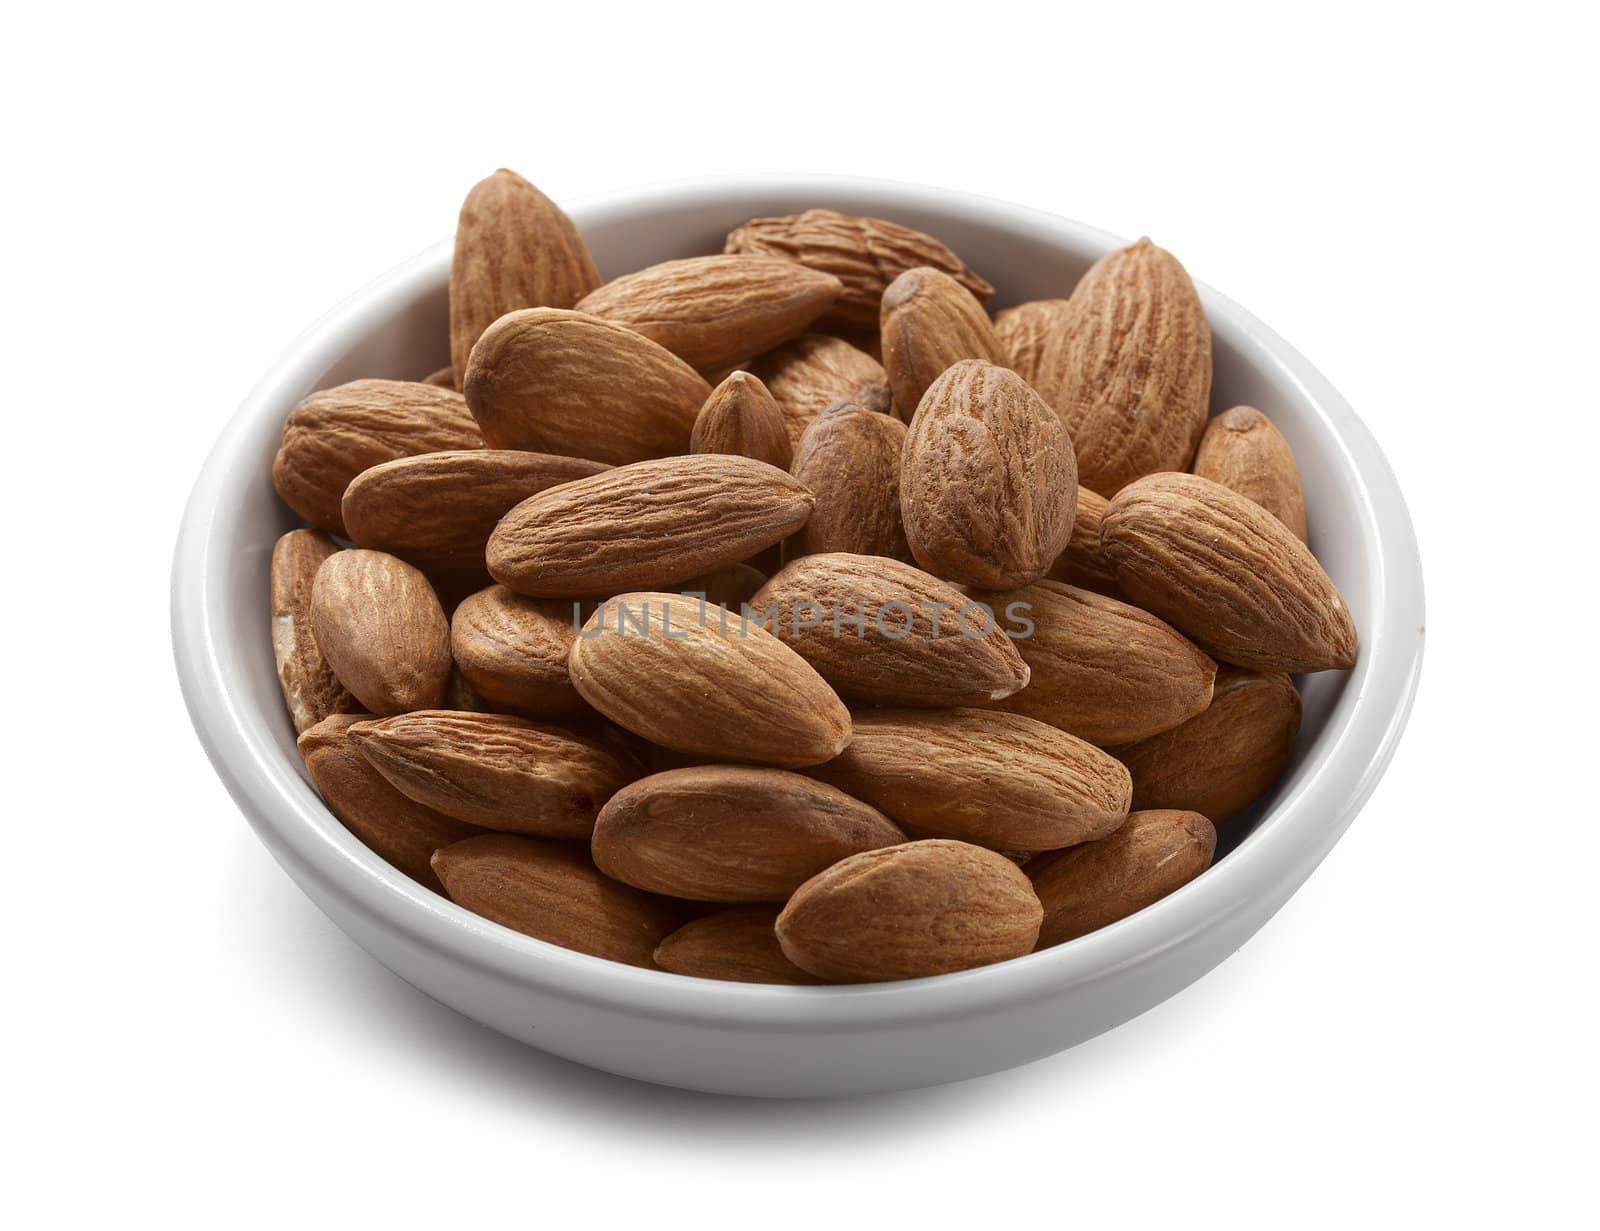 Almonds by Angorius